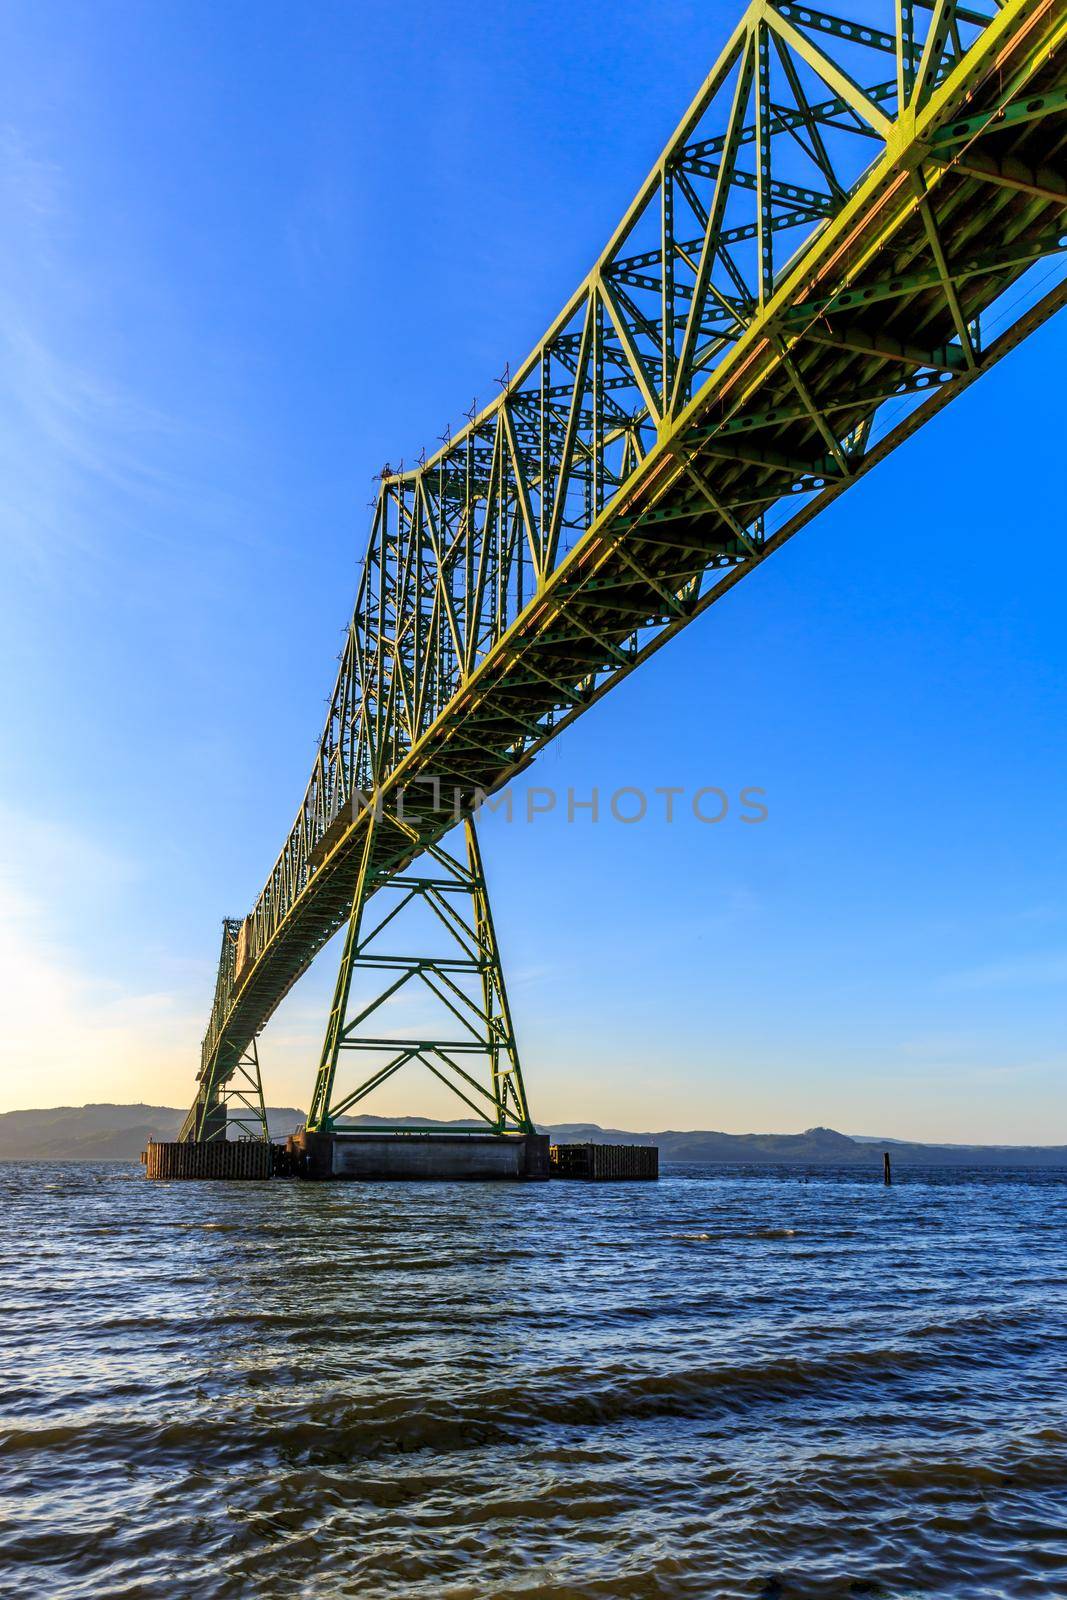 Astoria-Megler Bridge by gepeng